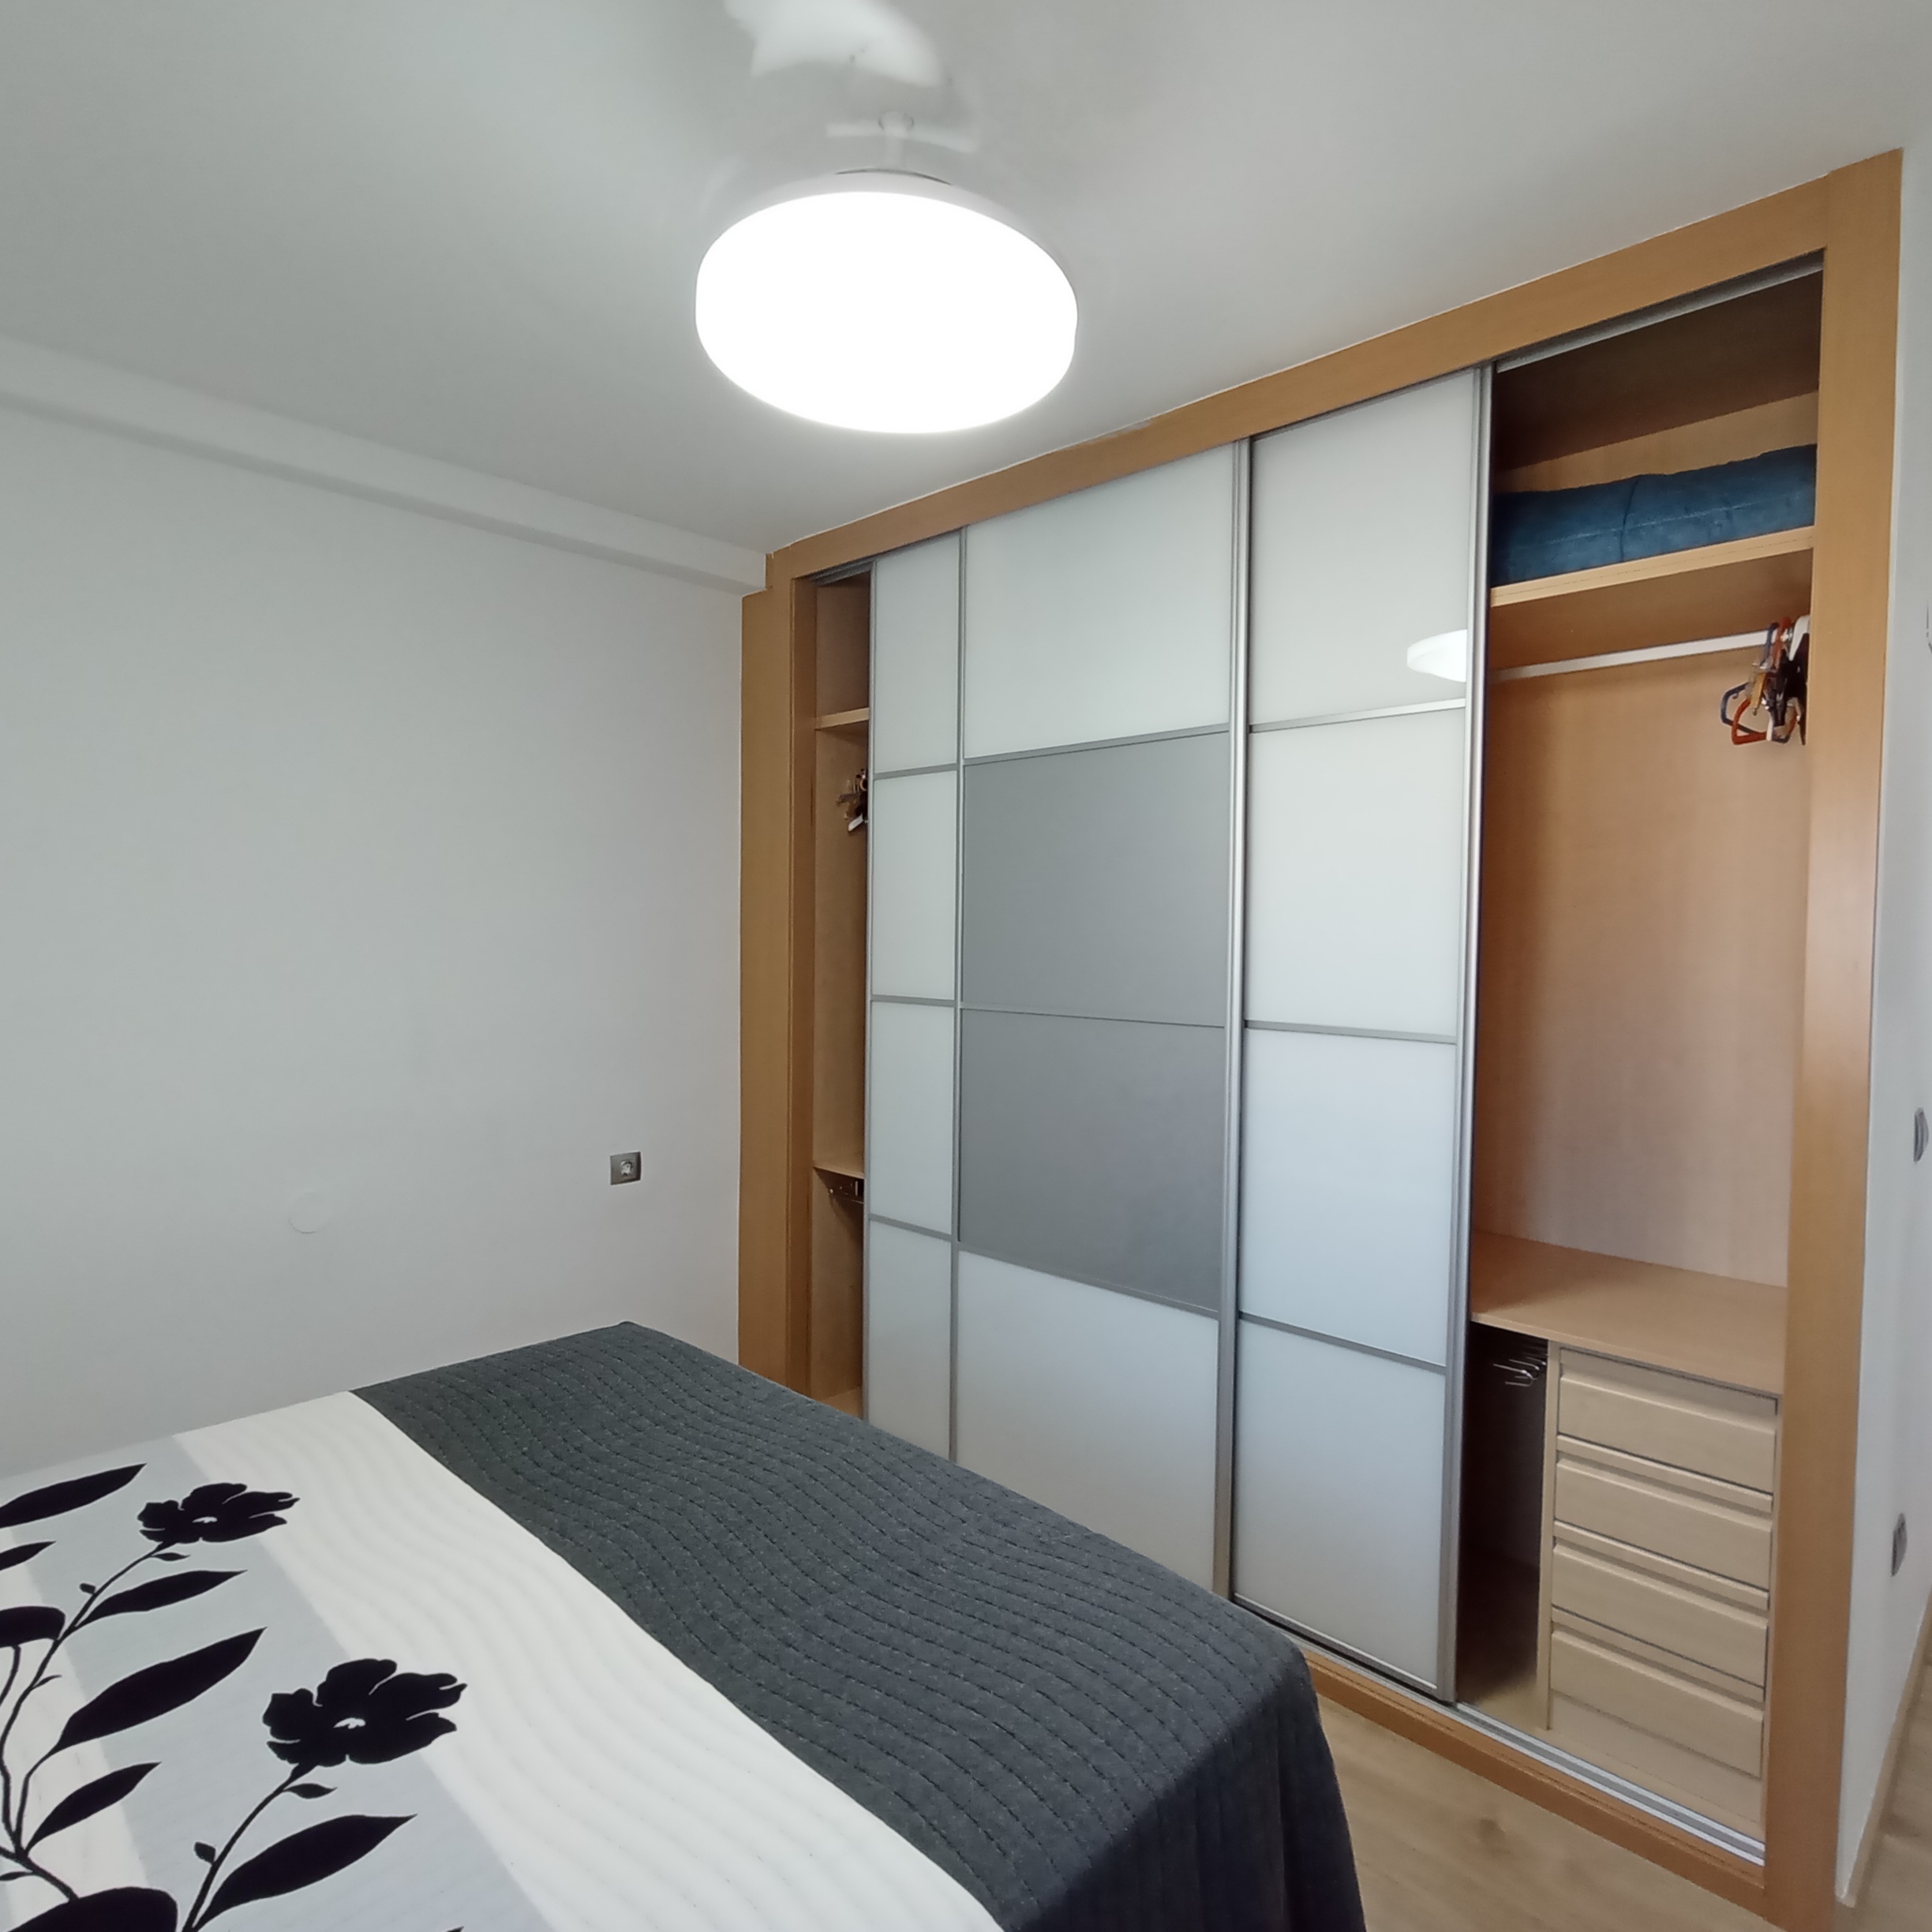 Escultor - 3 Bedroom apartment for rent in Valencia bedroom 2